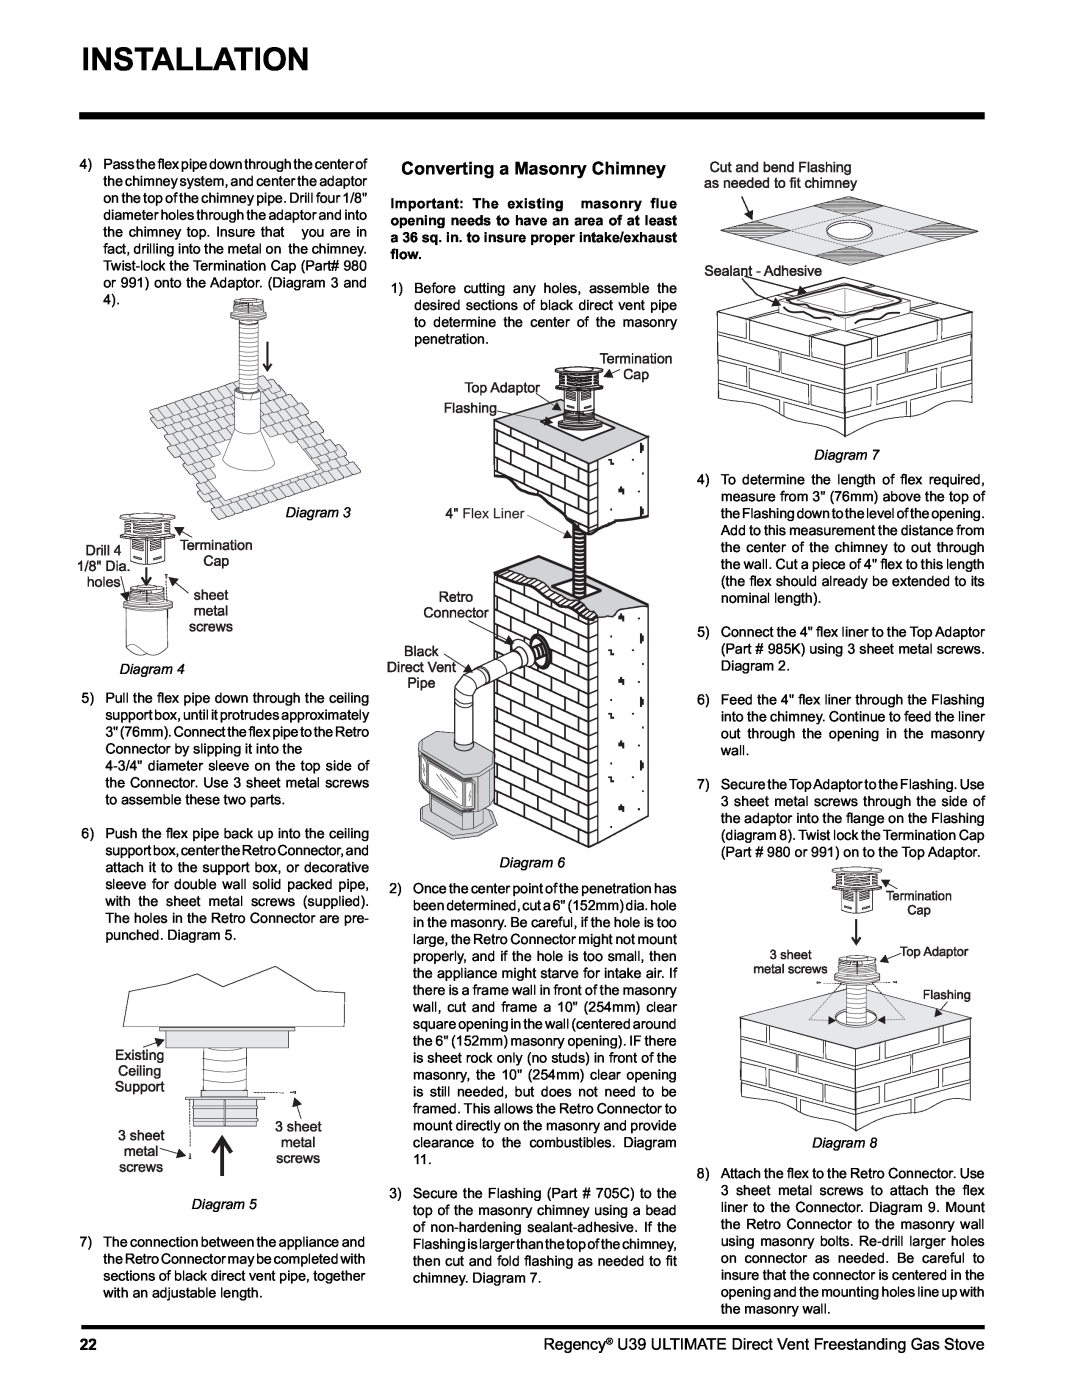 Regency U39-LP1, U39-NG1 installation manual Installation, Converting a Masonry Chimney, Diagram Diagram 